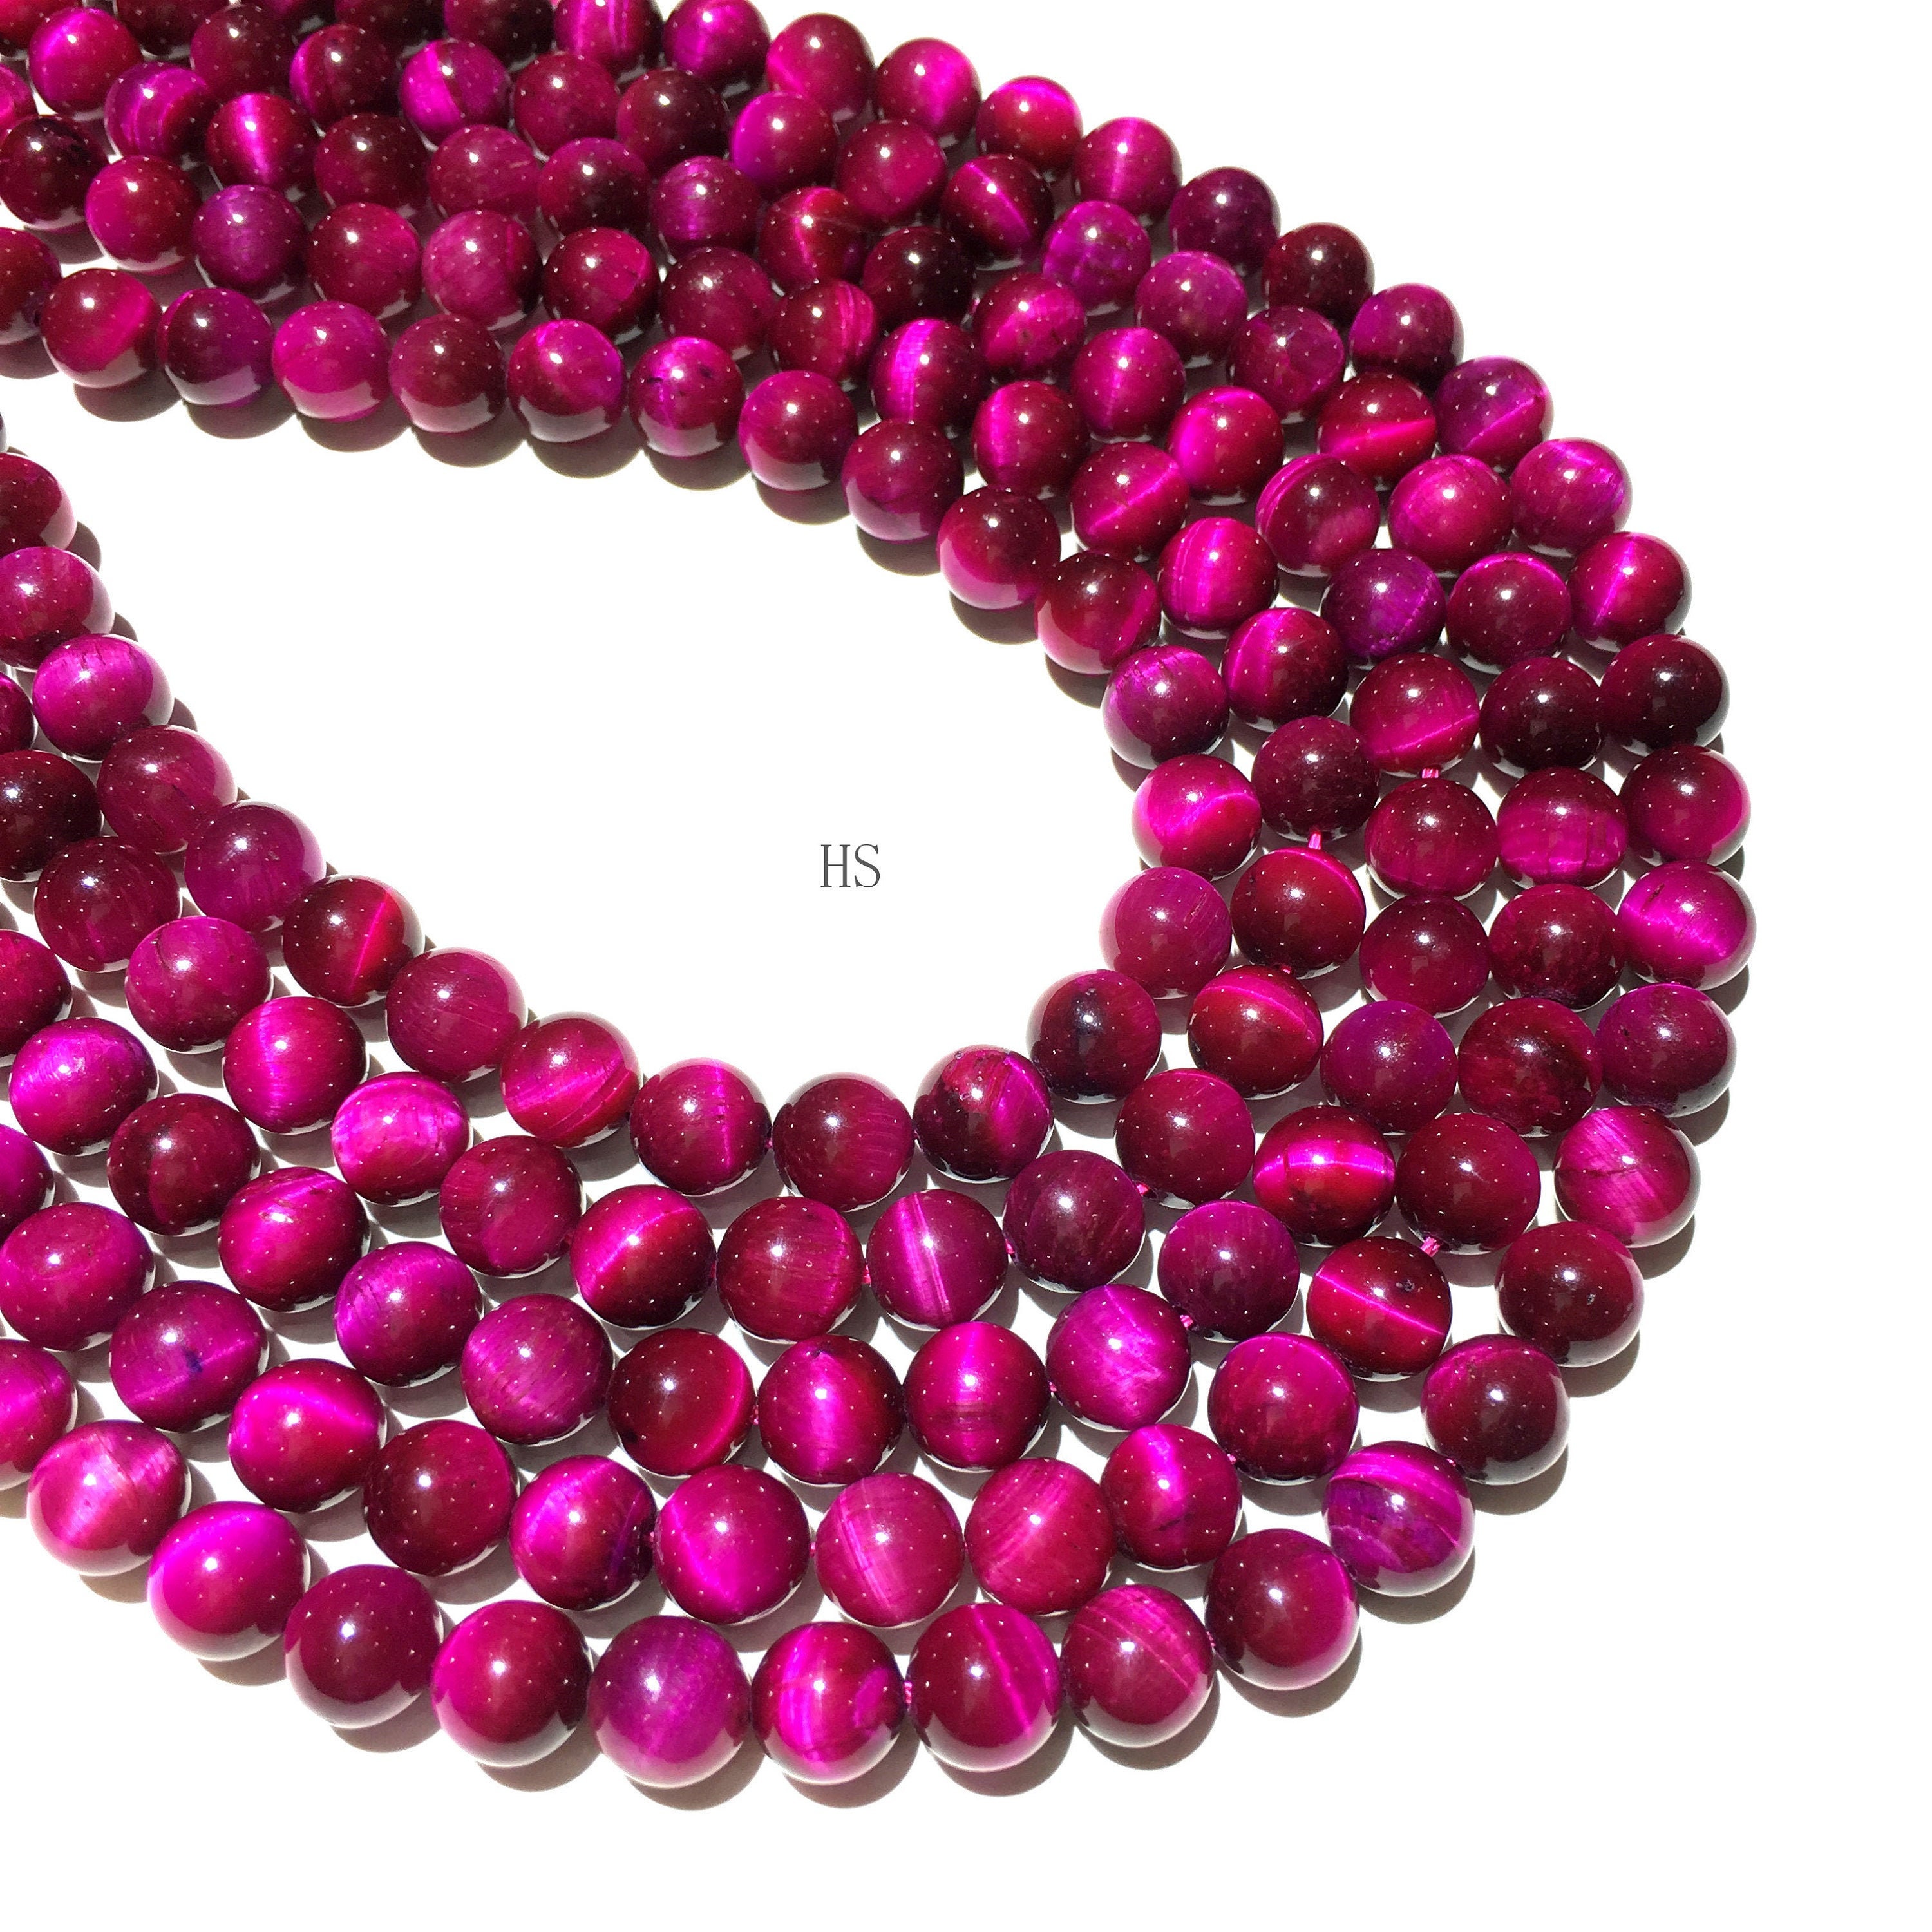  AIYINGZHU 140 pcs 8mm Natural Gemstone Beads for Jewelry  Making, Red Pink Tiger Eye Round Smooth Healing Agate Stone Beads Bulk